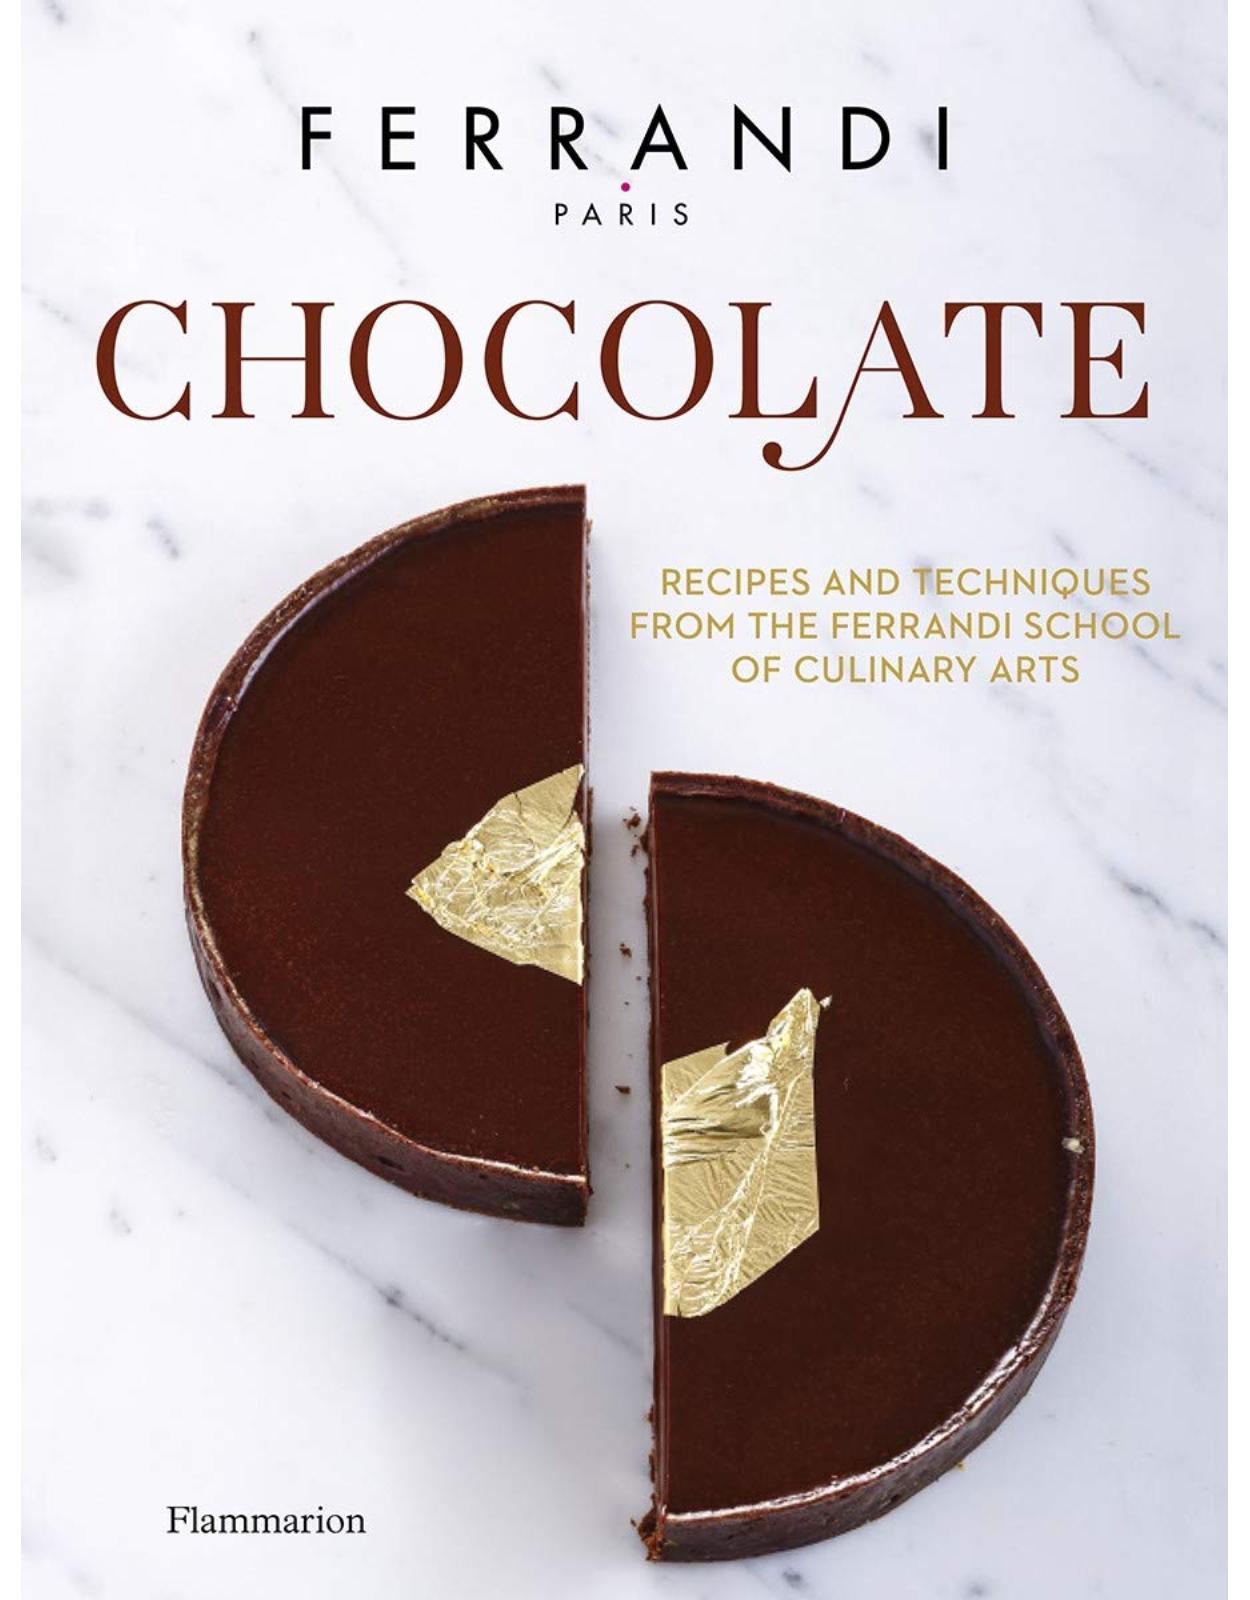 Chocolate: Recipes and Techniques from the Ferrandi School of Culinary Arts (Ferrandi, Paris) 